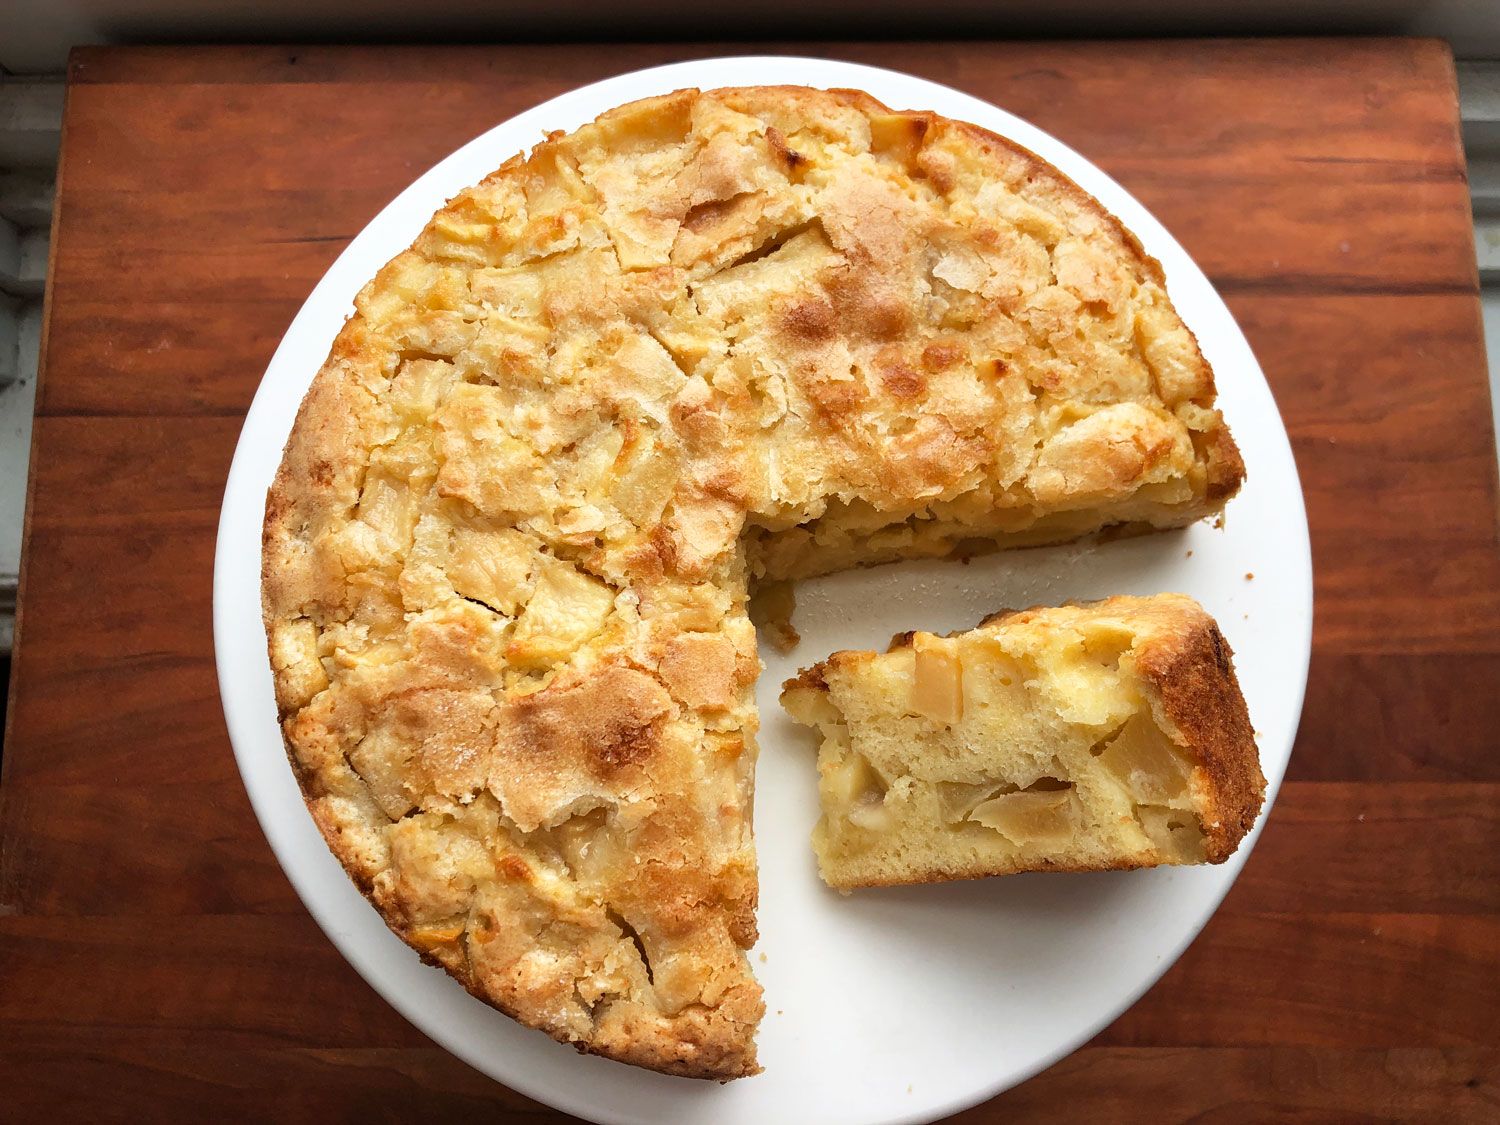 iyengar bakery style apple cake in kannada - Recipes - Desi Cooking Recipes